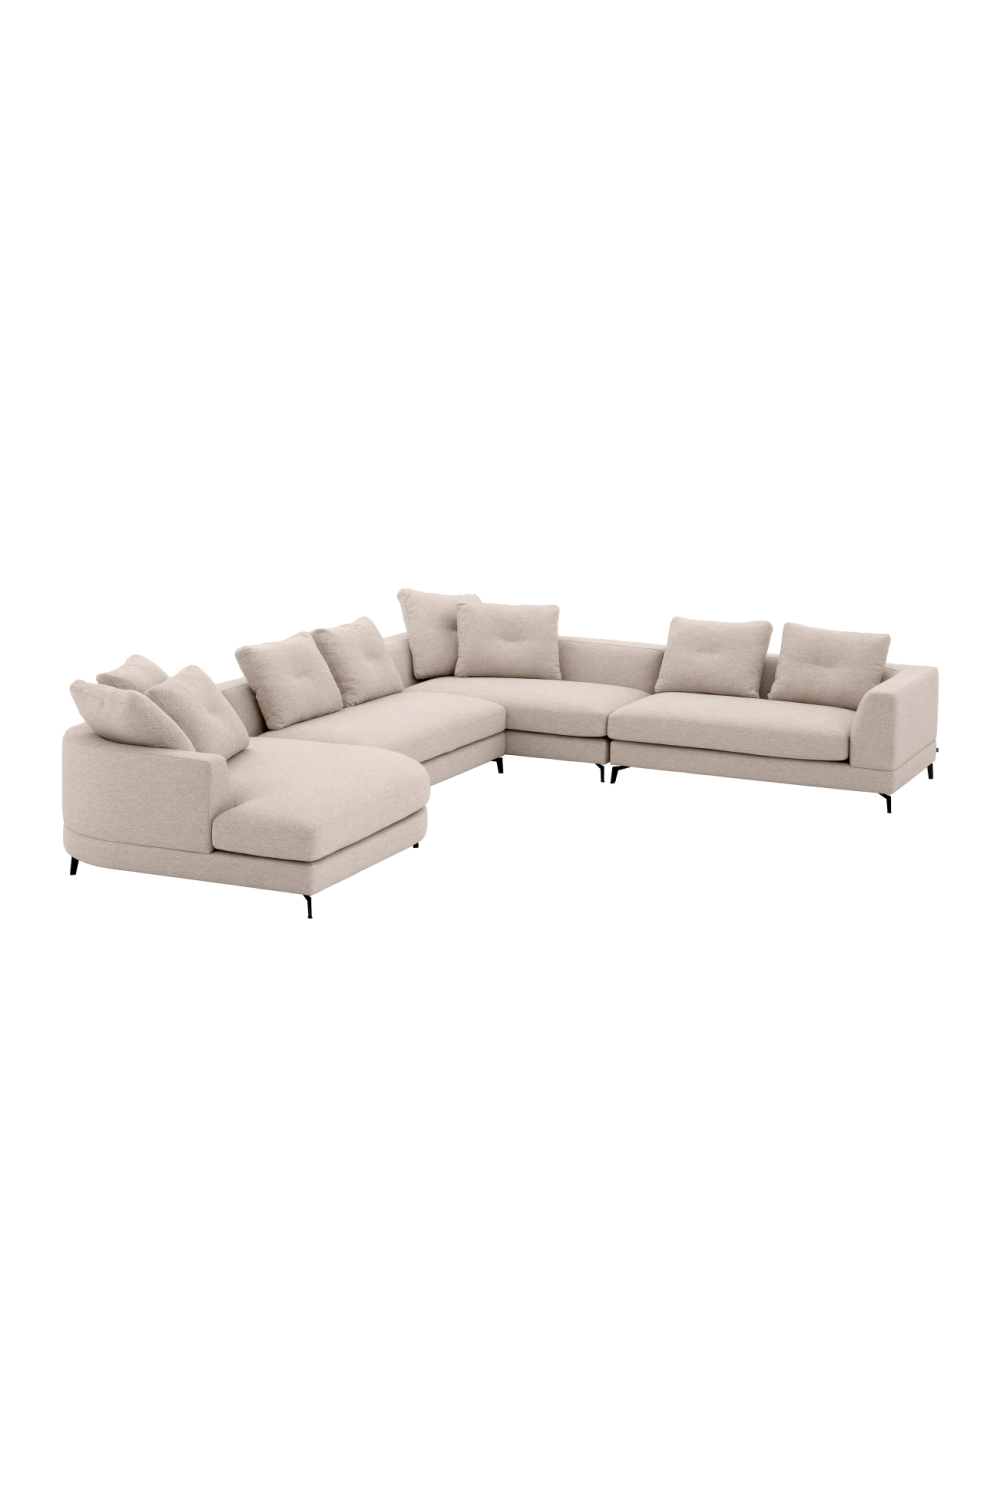 Beige Sectional Modern Sofa L